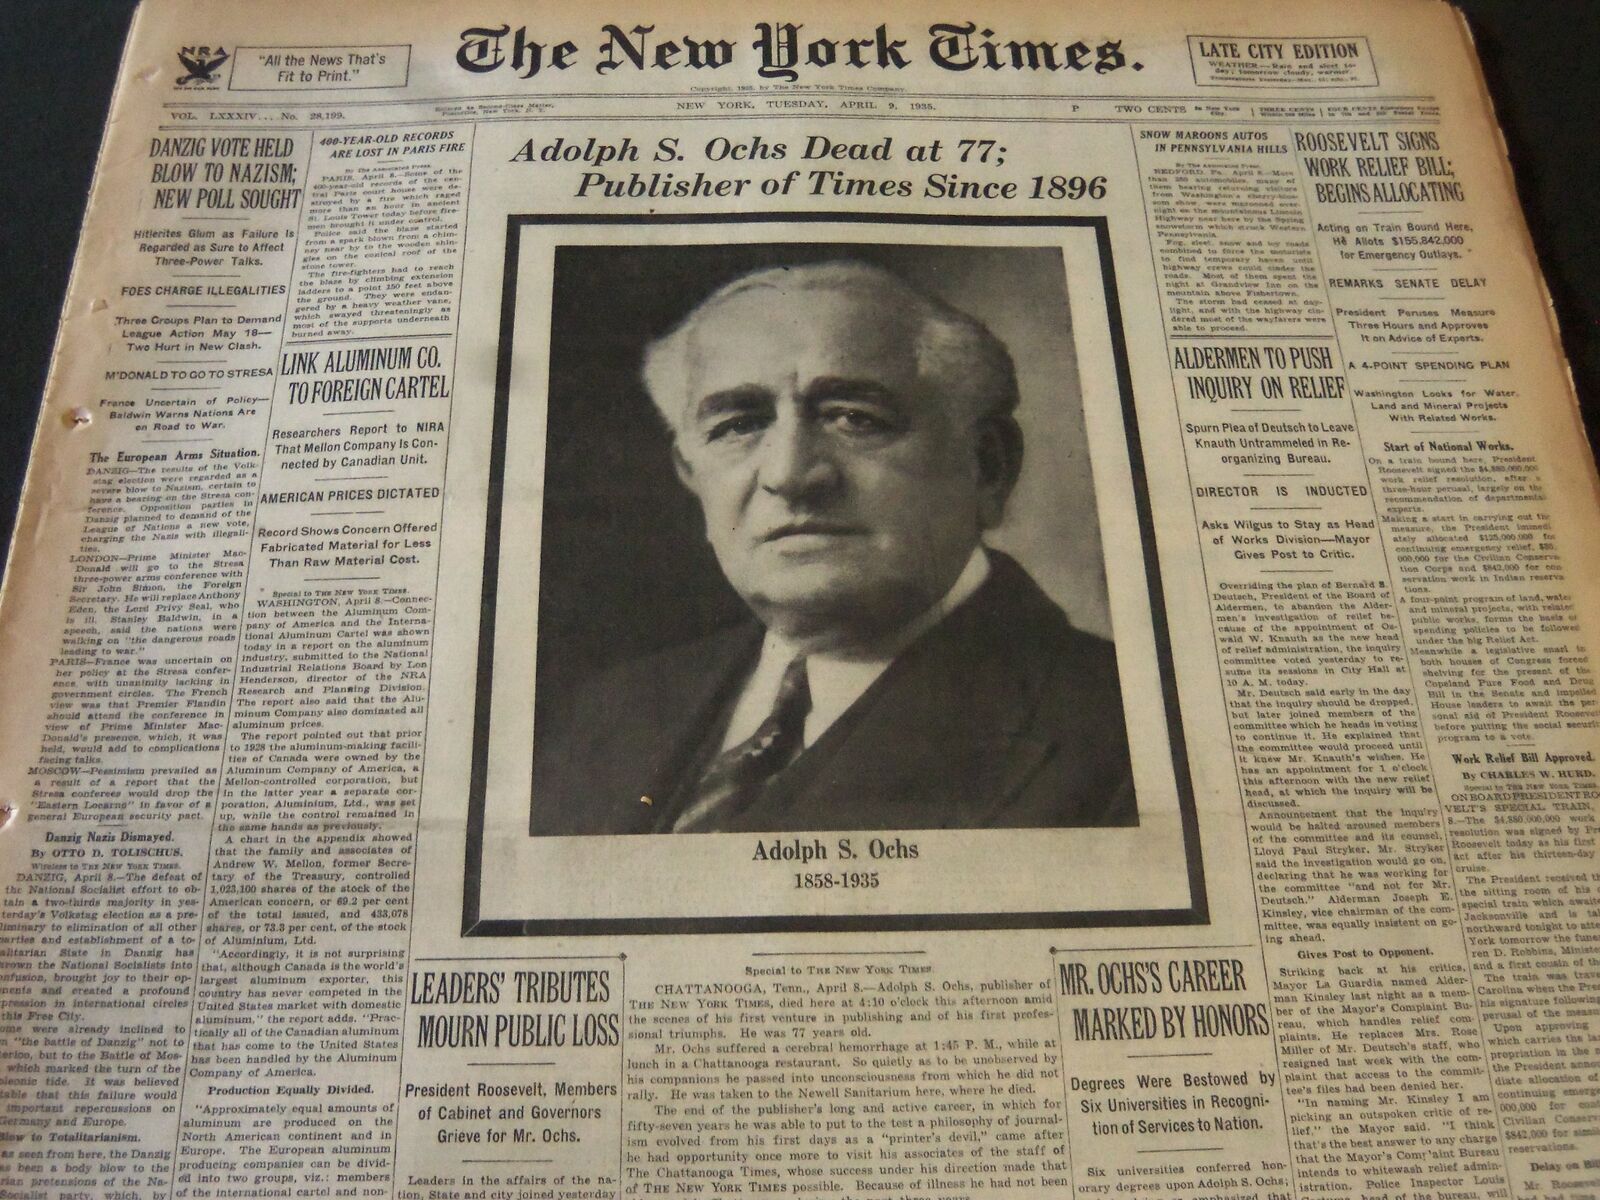 1935 APRIL 9 NEW YORK TIMES - ADOLPH S. OCHS DEAD AT 77 - NT 5915